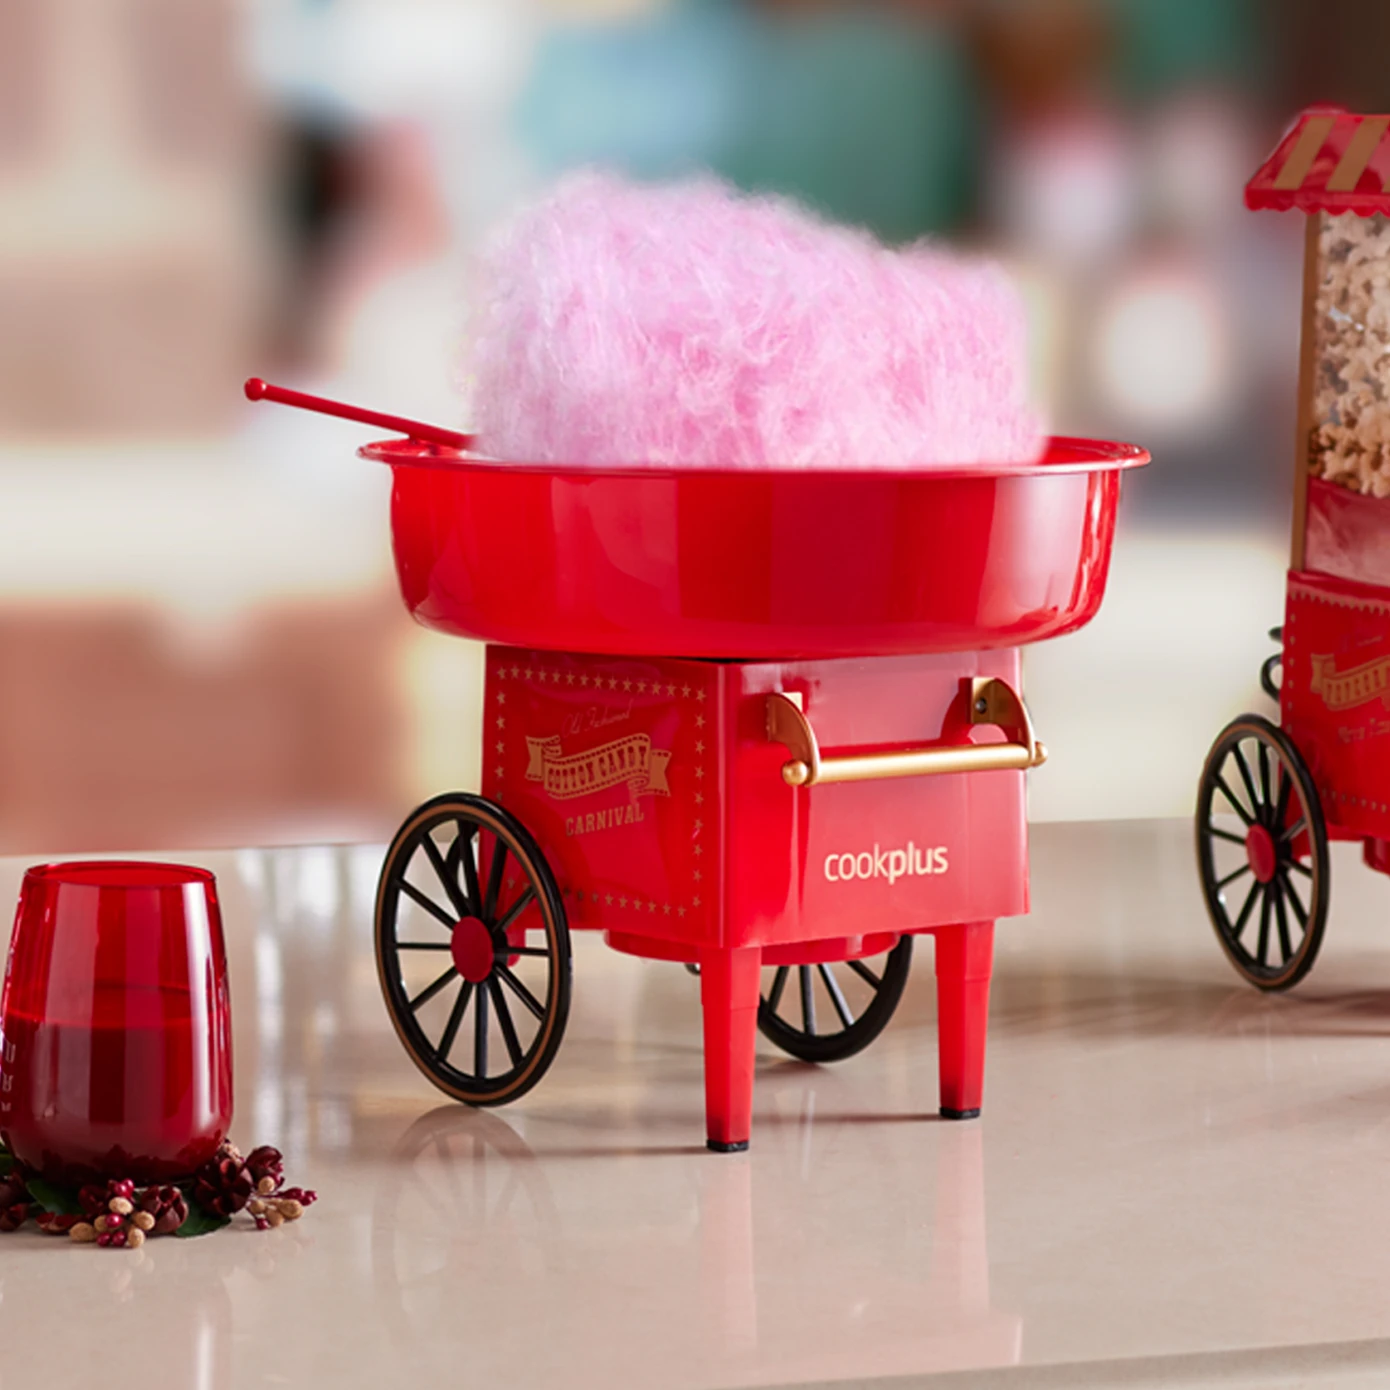 Miniature Cookplus Candy Maker by Karaca